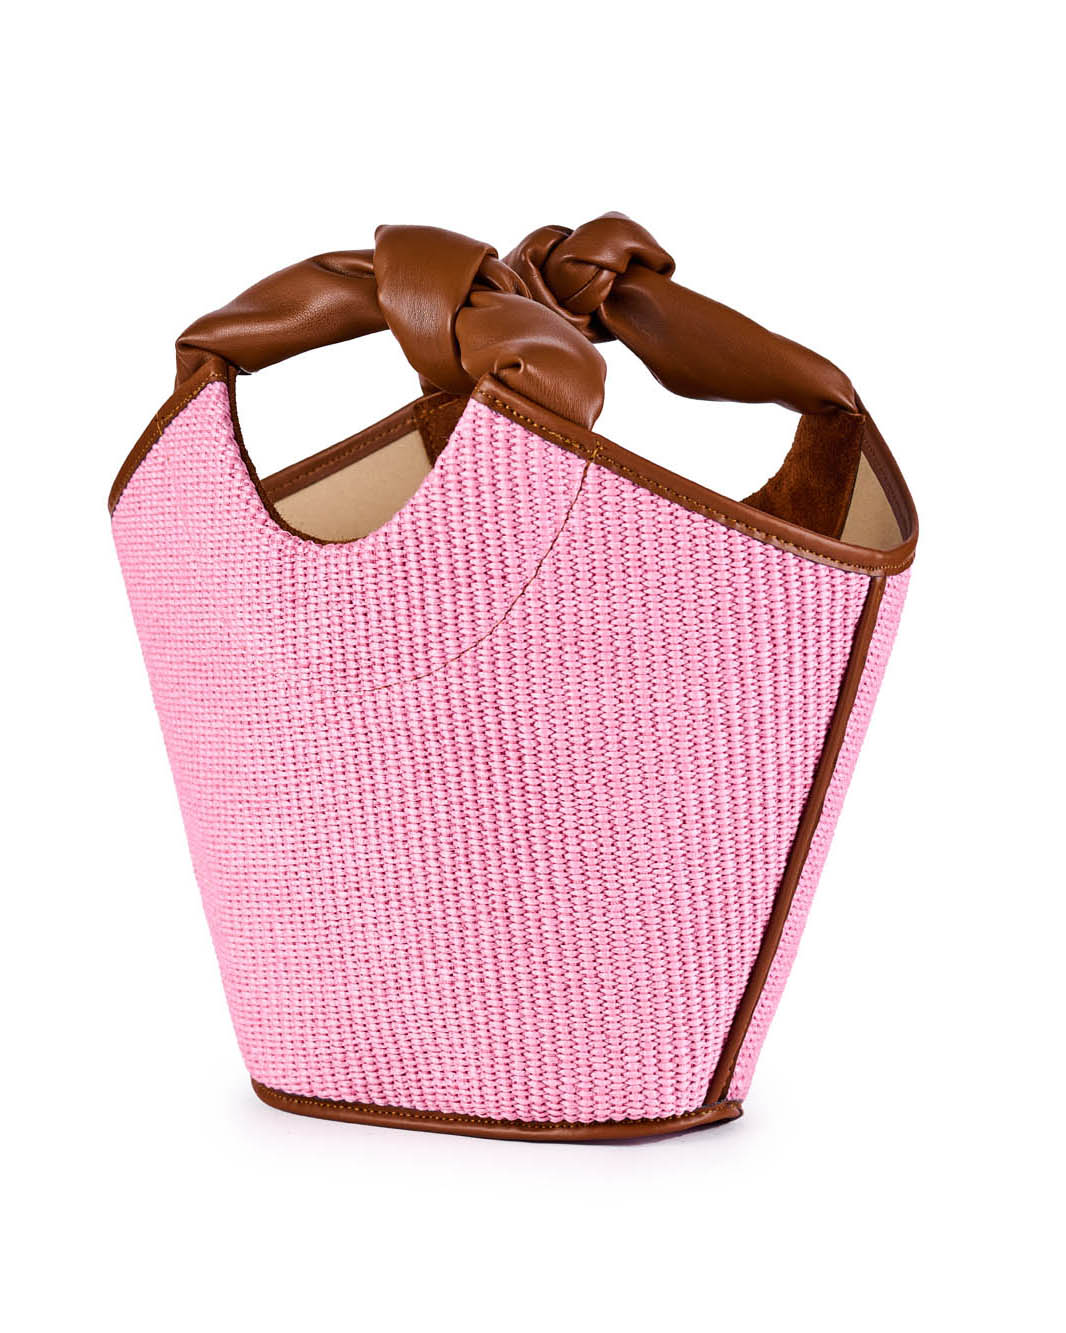 Pink woven handbag with brown leather handles